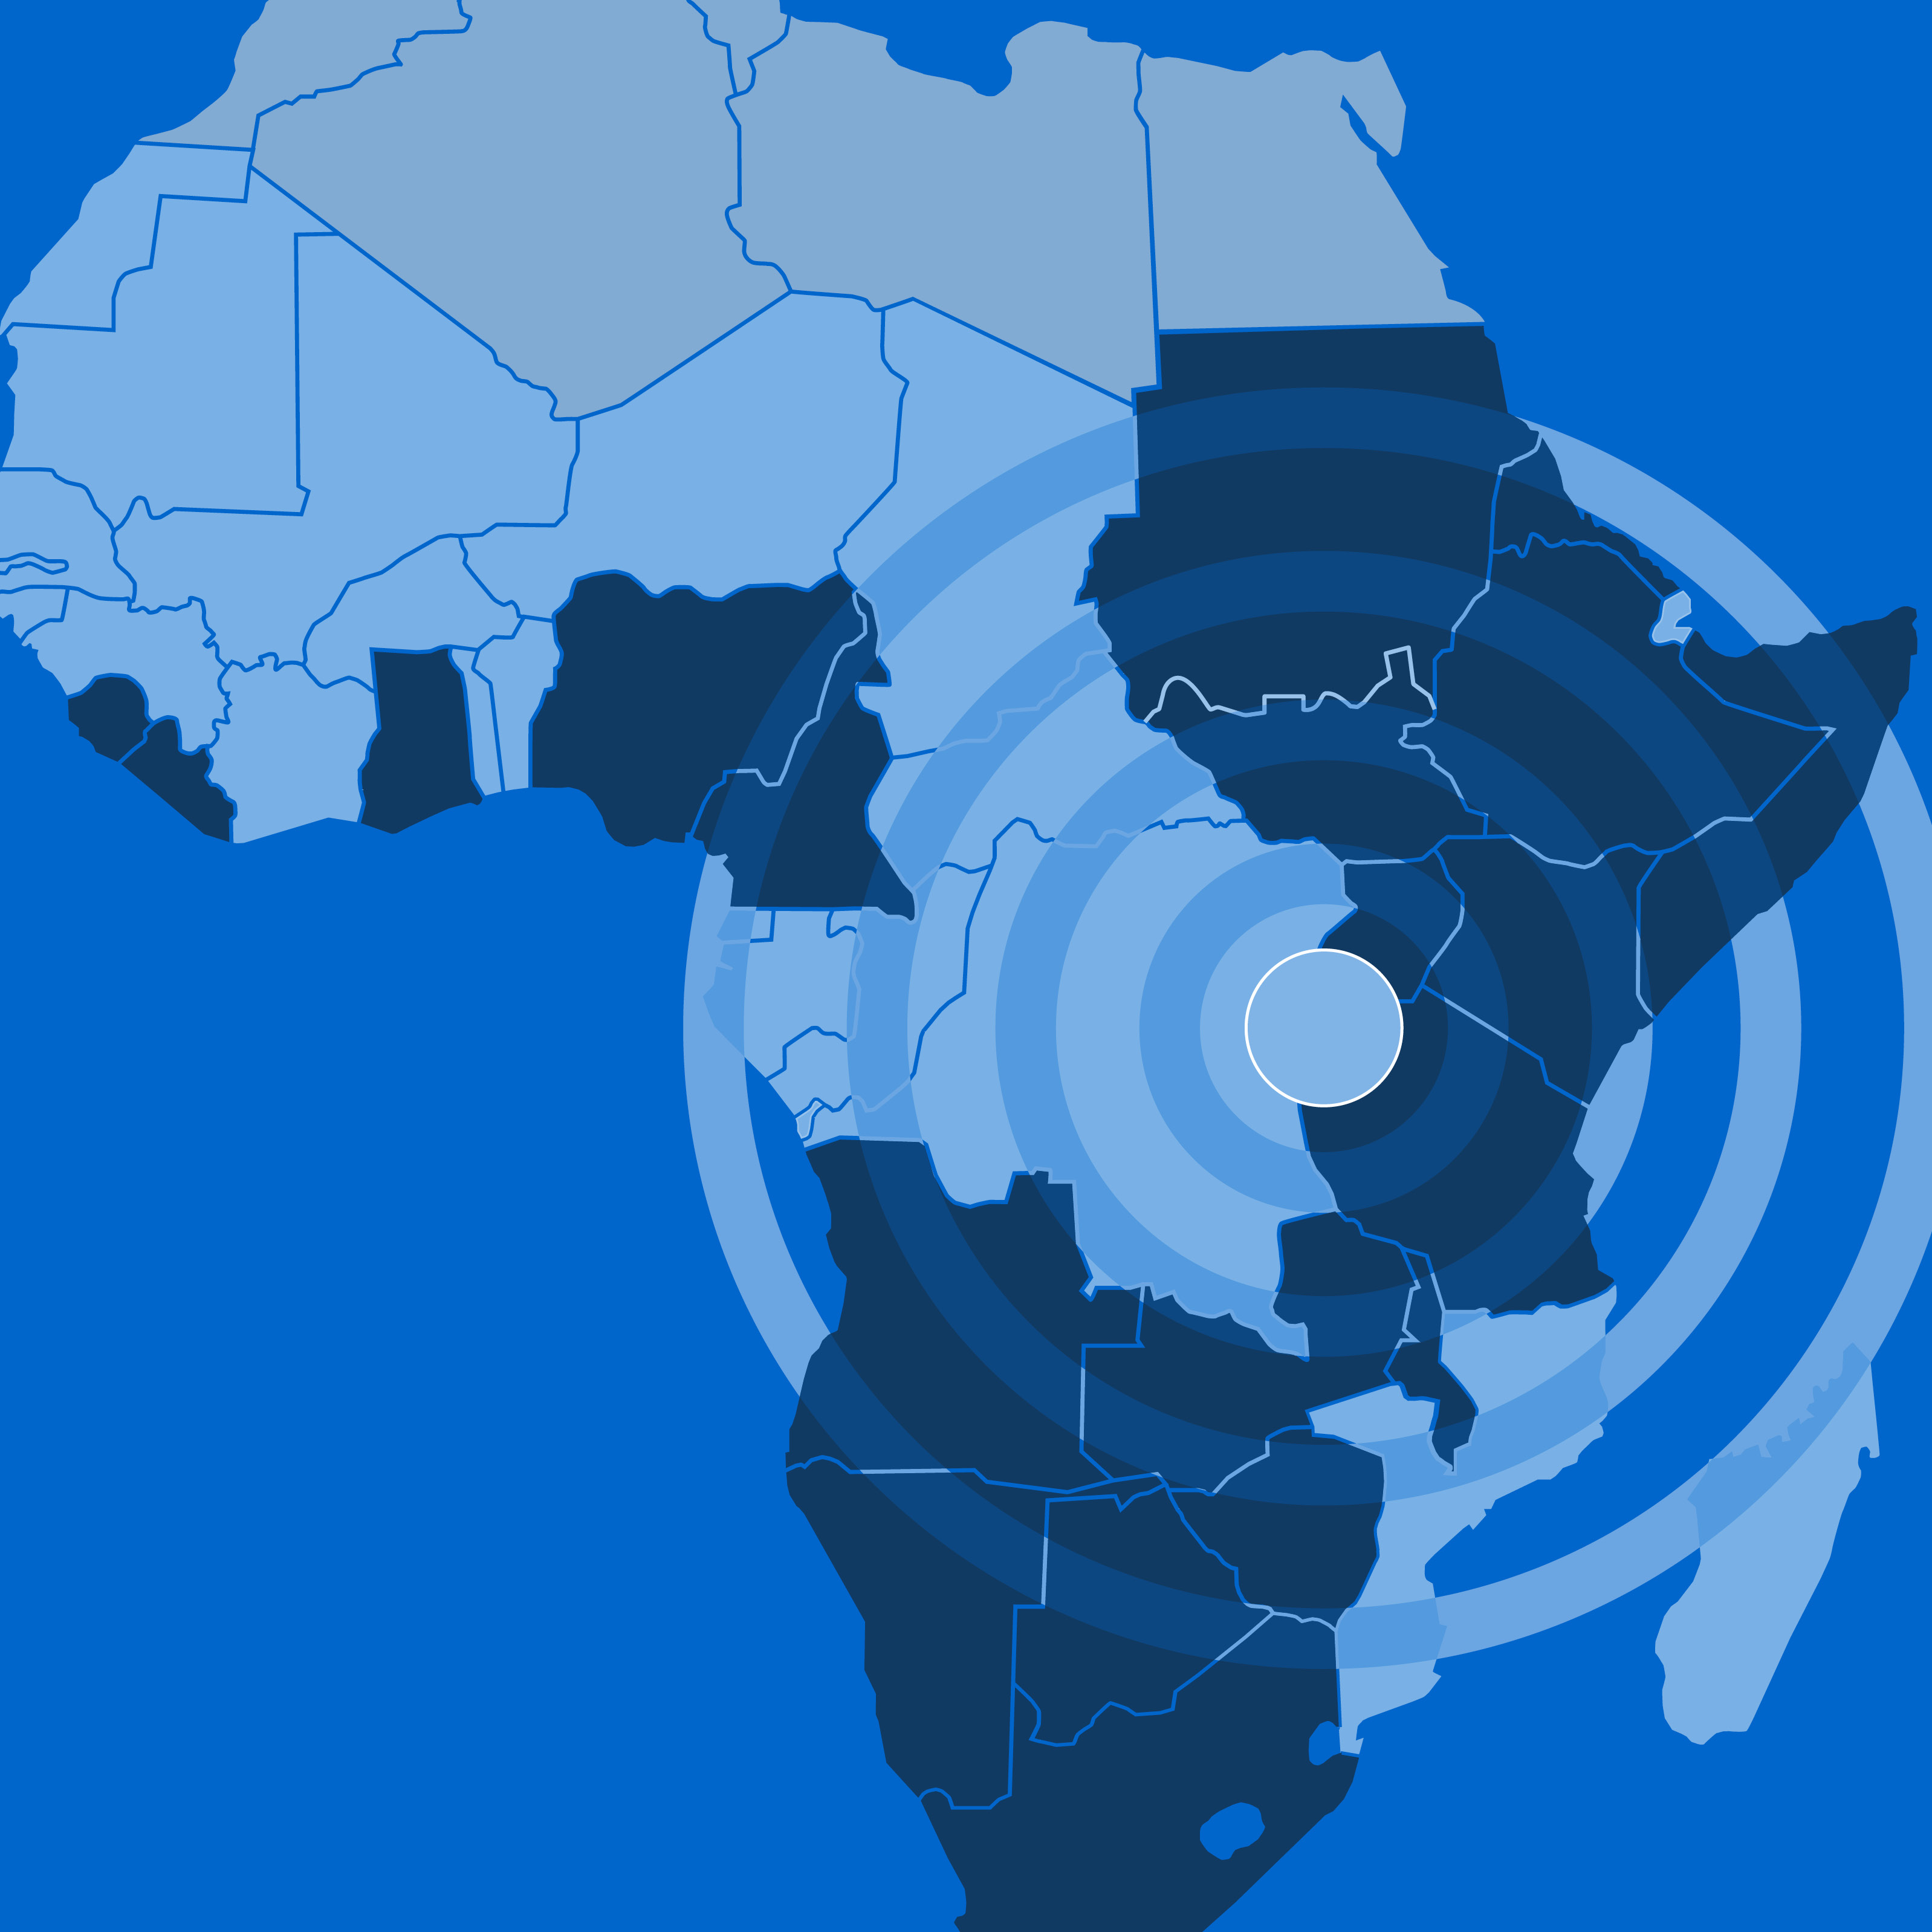 Map of Africa focusing on Rwanda